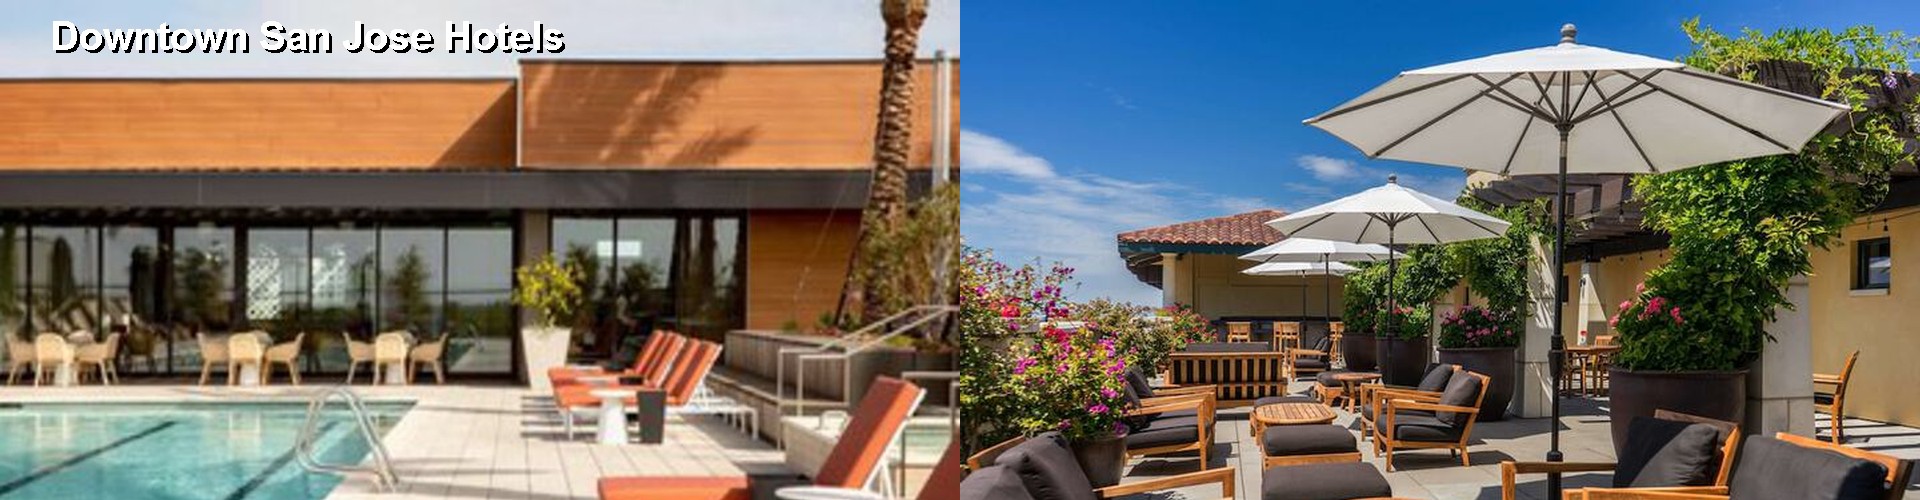 5 Best Hotels near Downtown San Jose